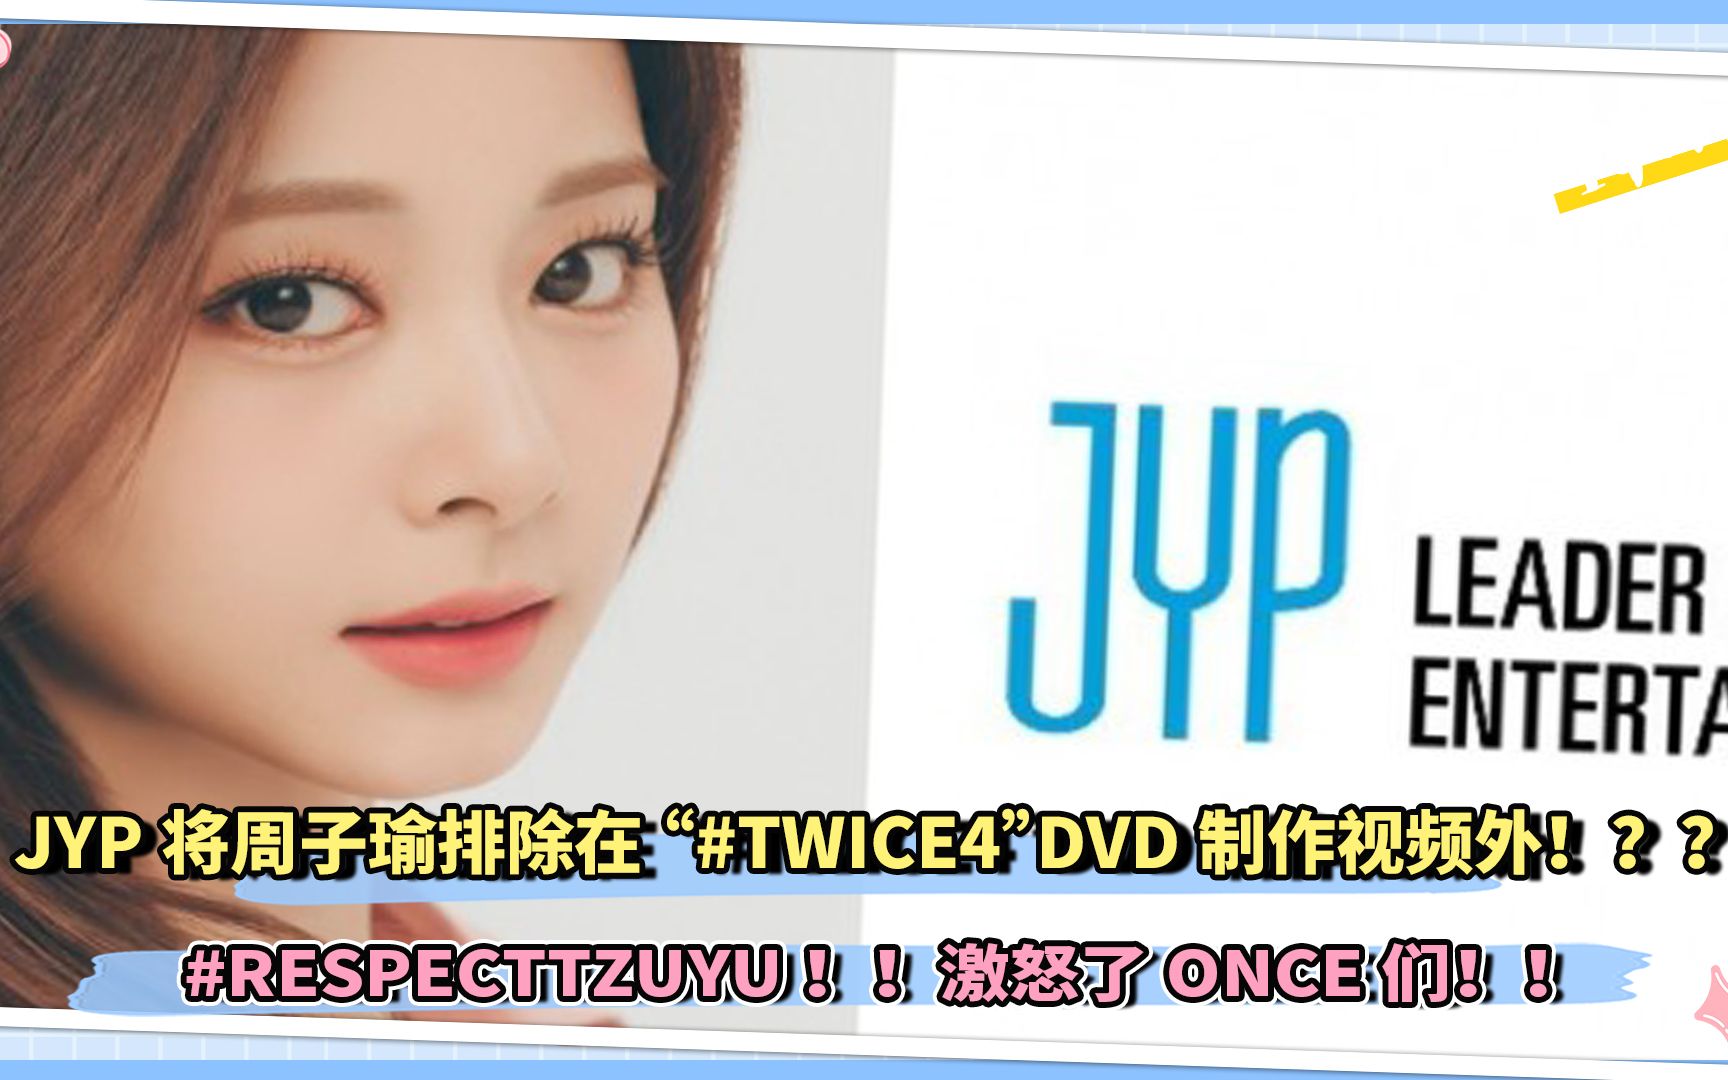 RESPECTTZUYU：JYP将周子瑜排除在“#TWICE4”DVD制作视频外，激怒了ONCE们！！_哔哩哔哩(゜-゜)つロ干杯~-bilibili